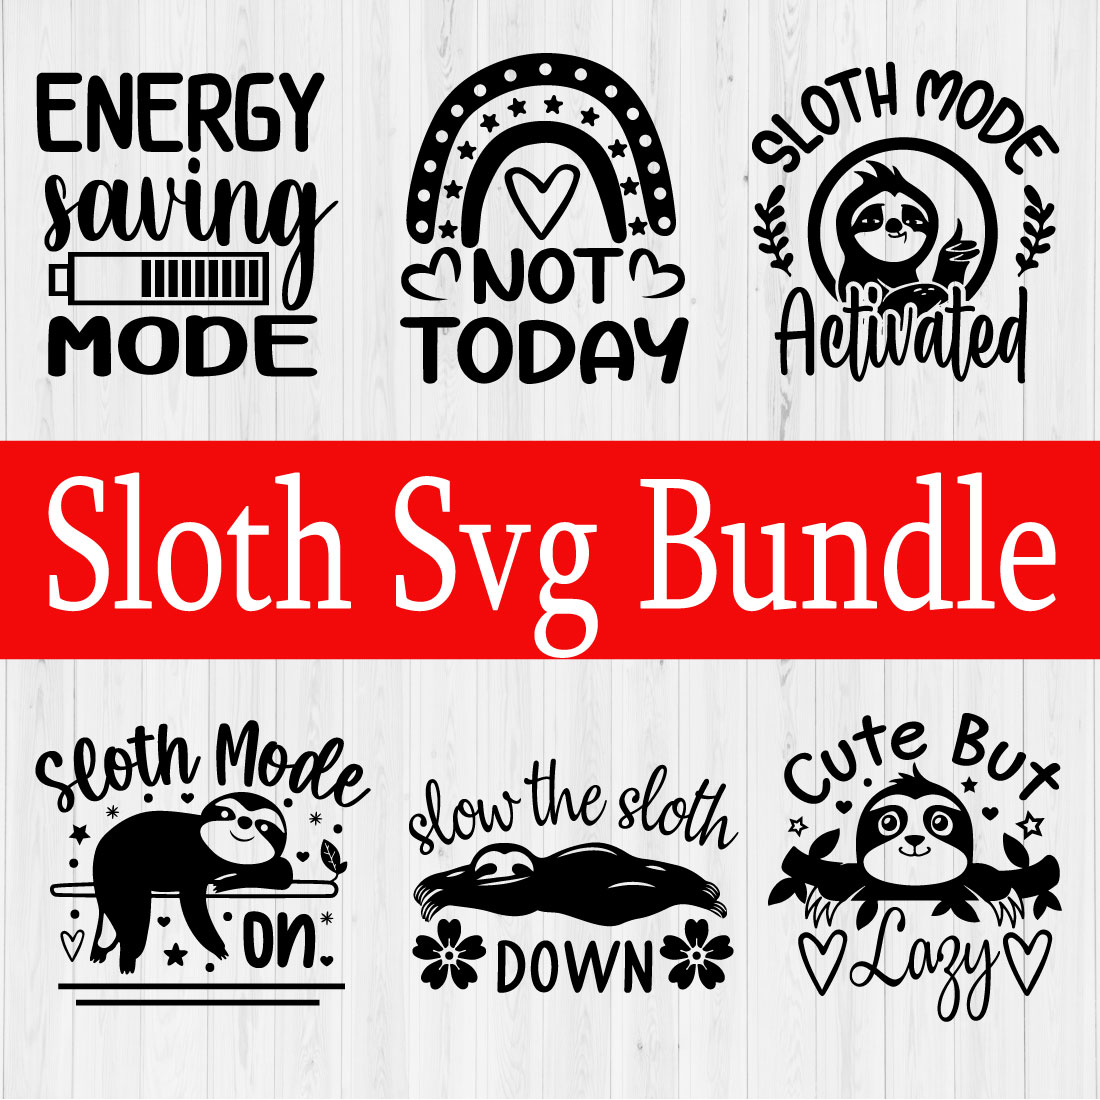 Sloth Svg Bundle Vol1 preview image.